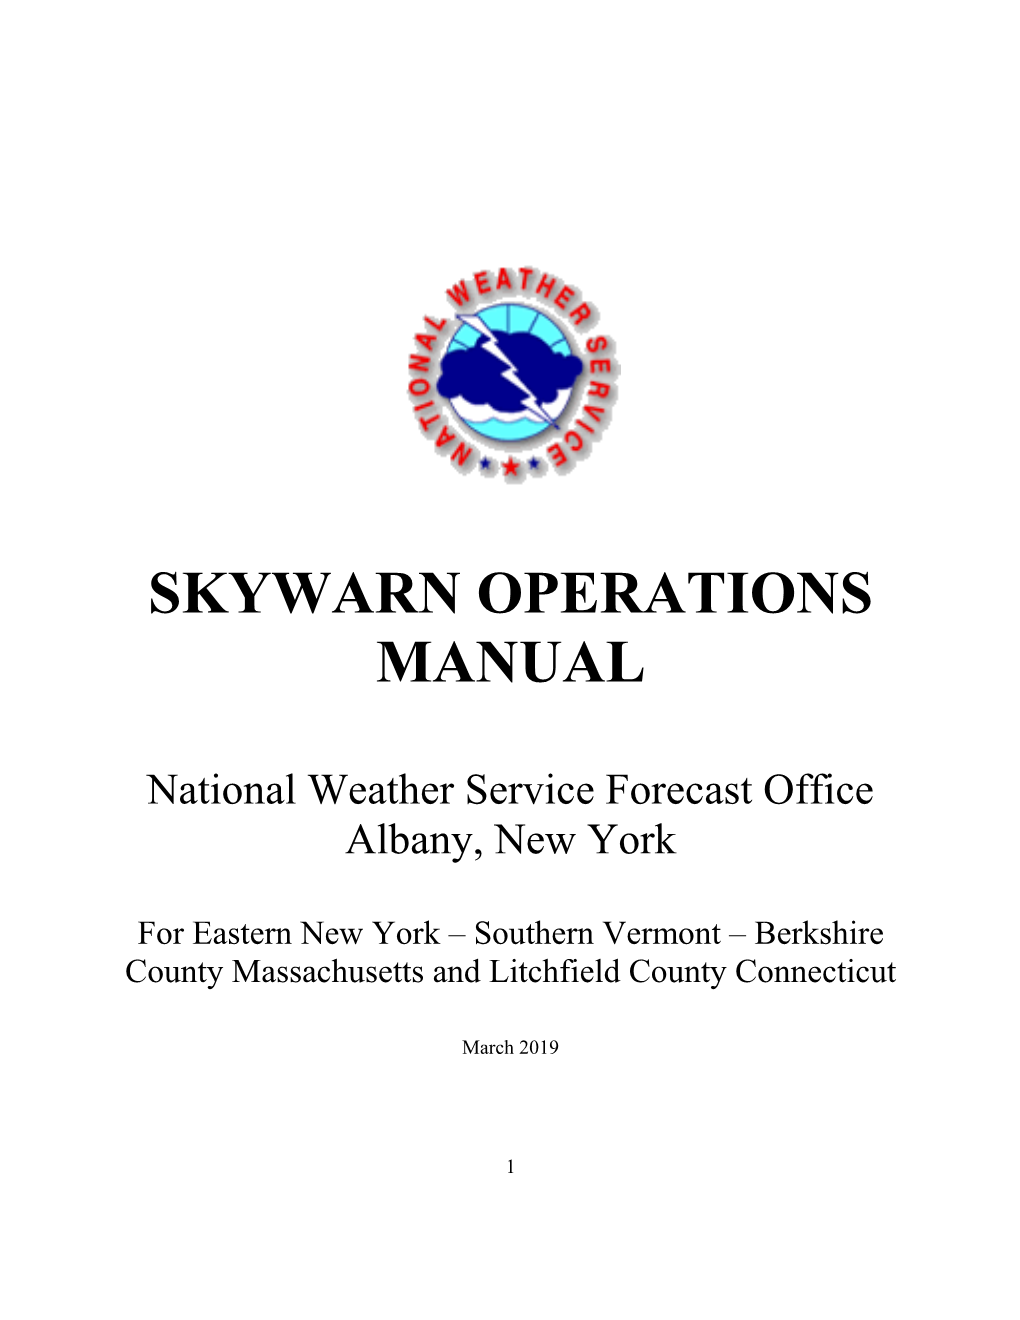 Skywarn Operations Manual